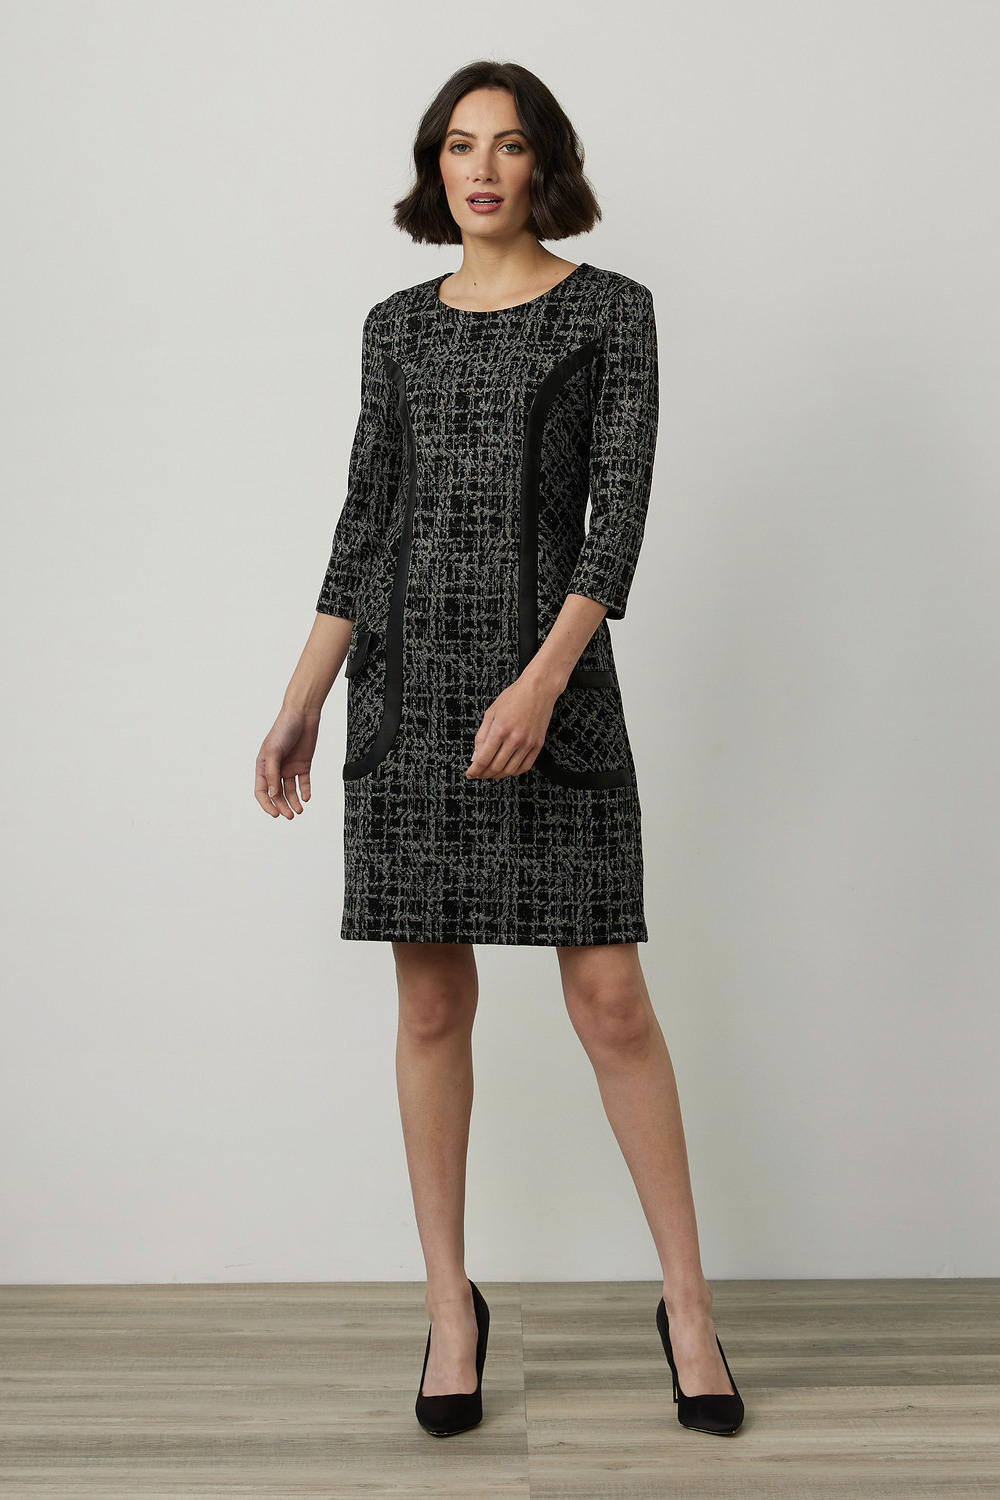 Joseph Ribkoff 3/4 Sleeve Printed Dress Style 214152. Black/grey